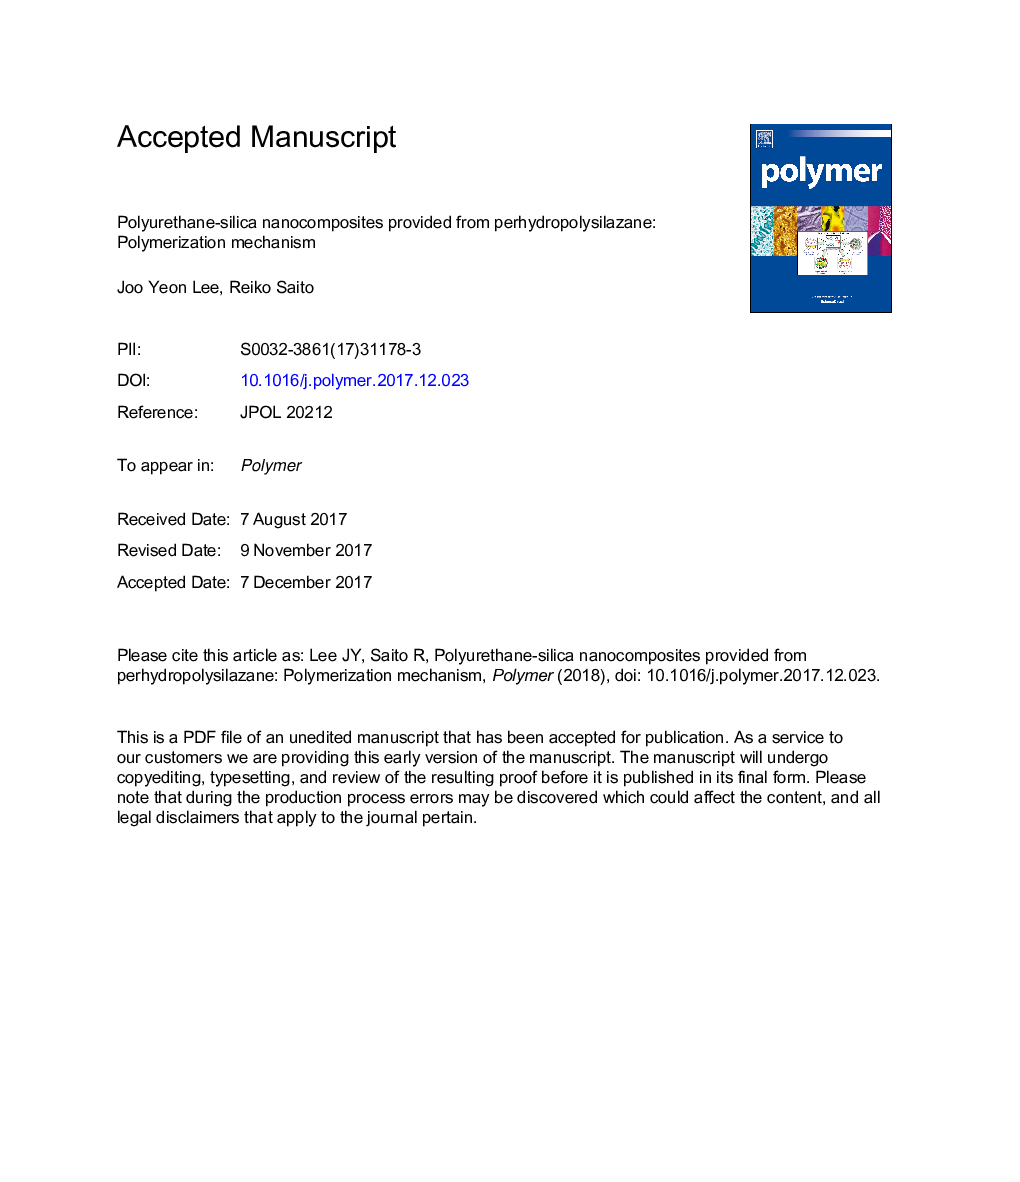 Polyurethane-silica nanocomposites provided from perhydropolysilazane: Polymerization mechanism